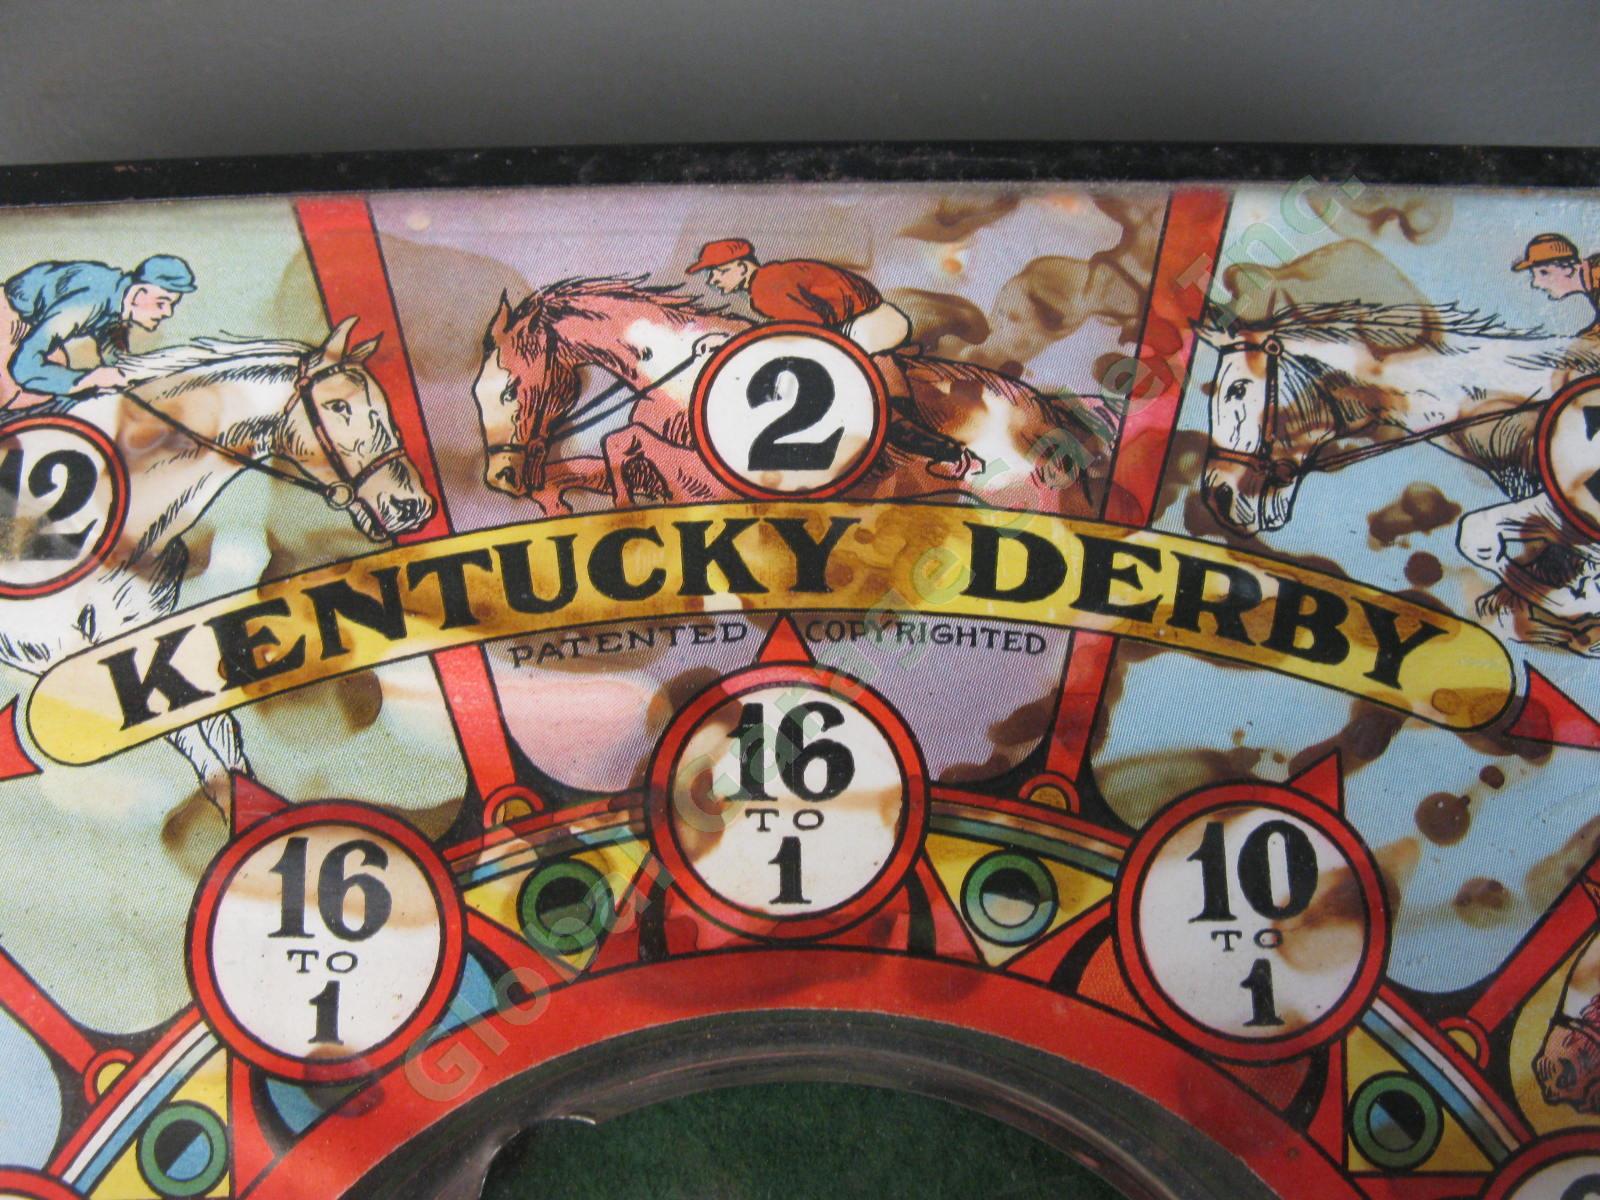 Stone Brothers Kentucky Derby Horse Racing Dice Gambling Trade Simulator Game NR 2